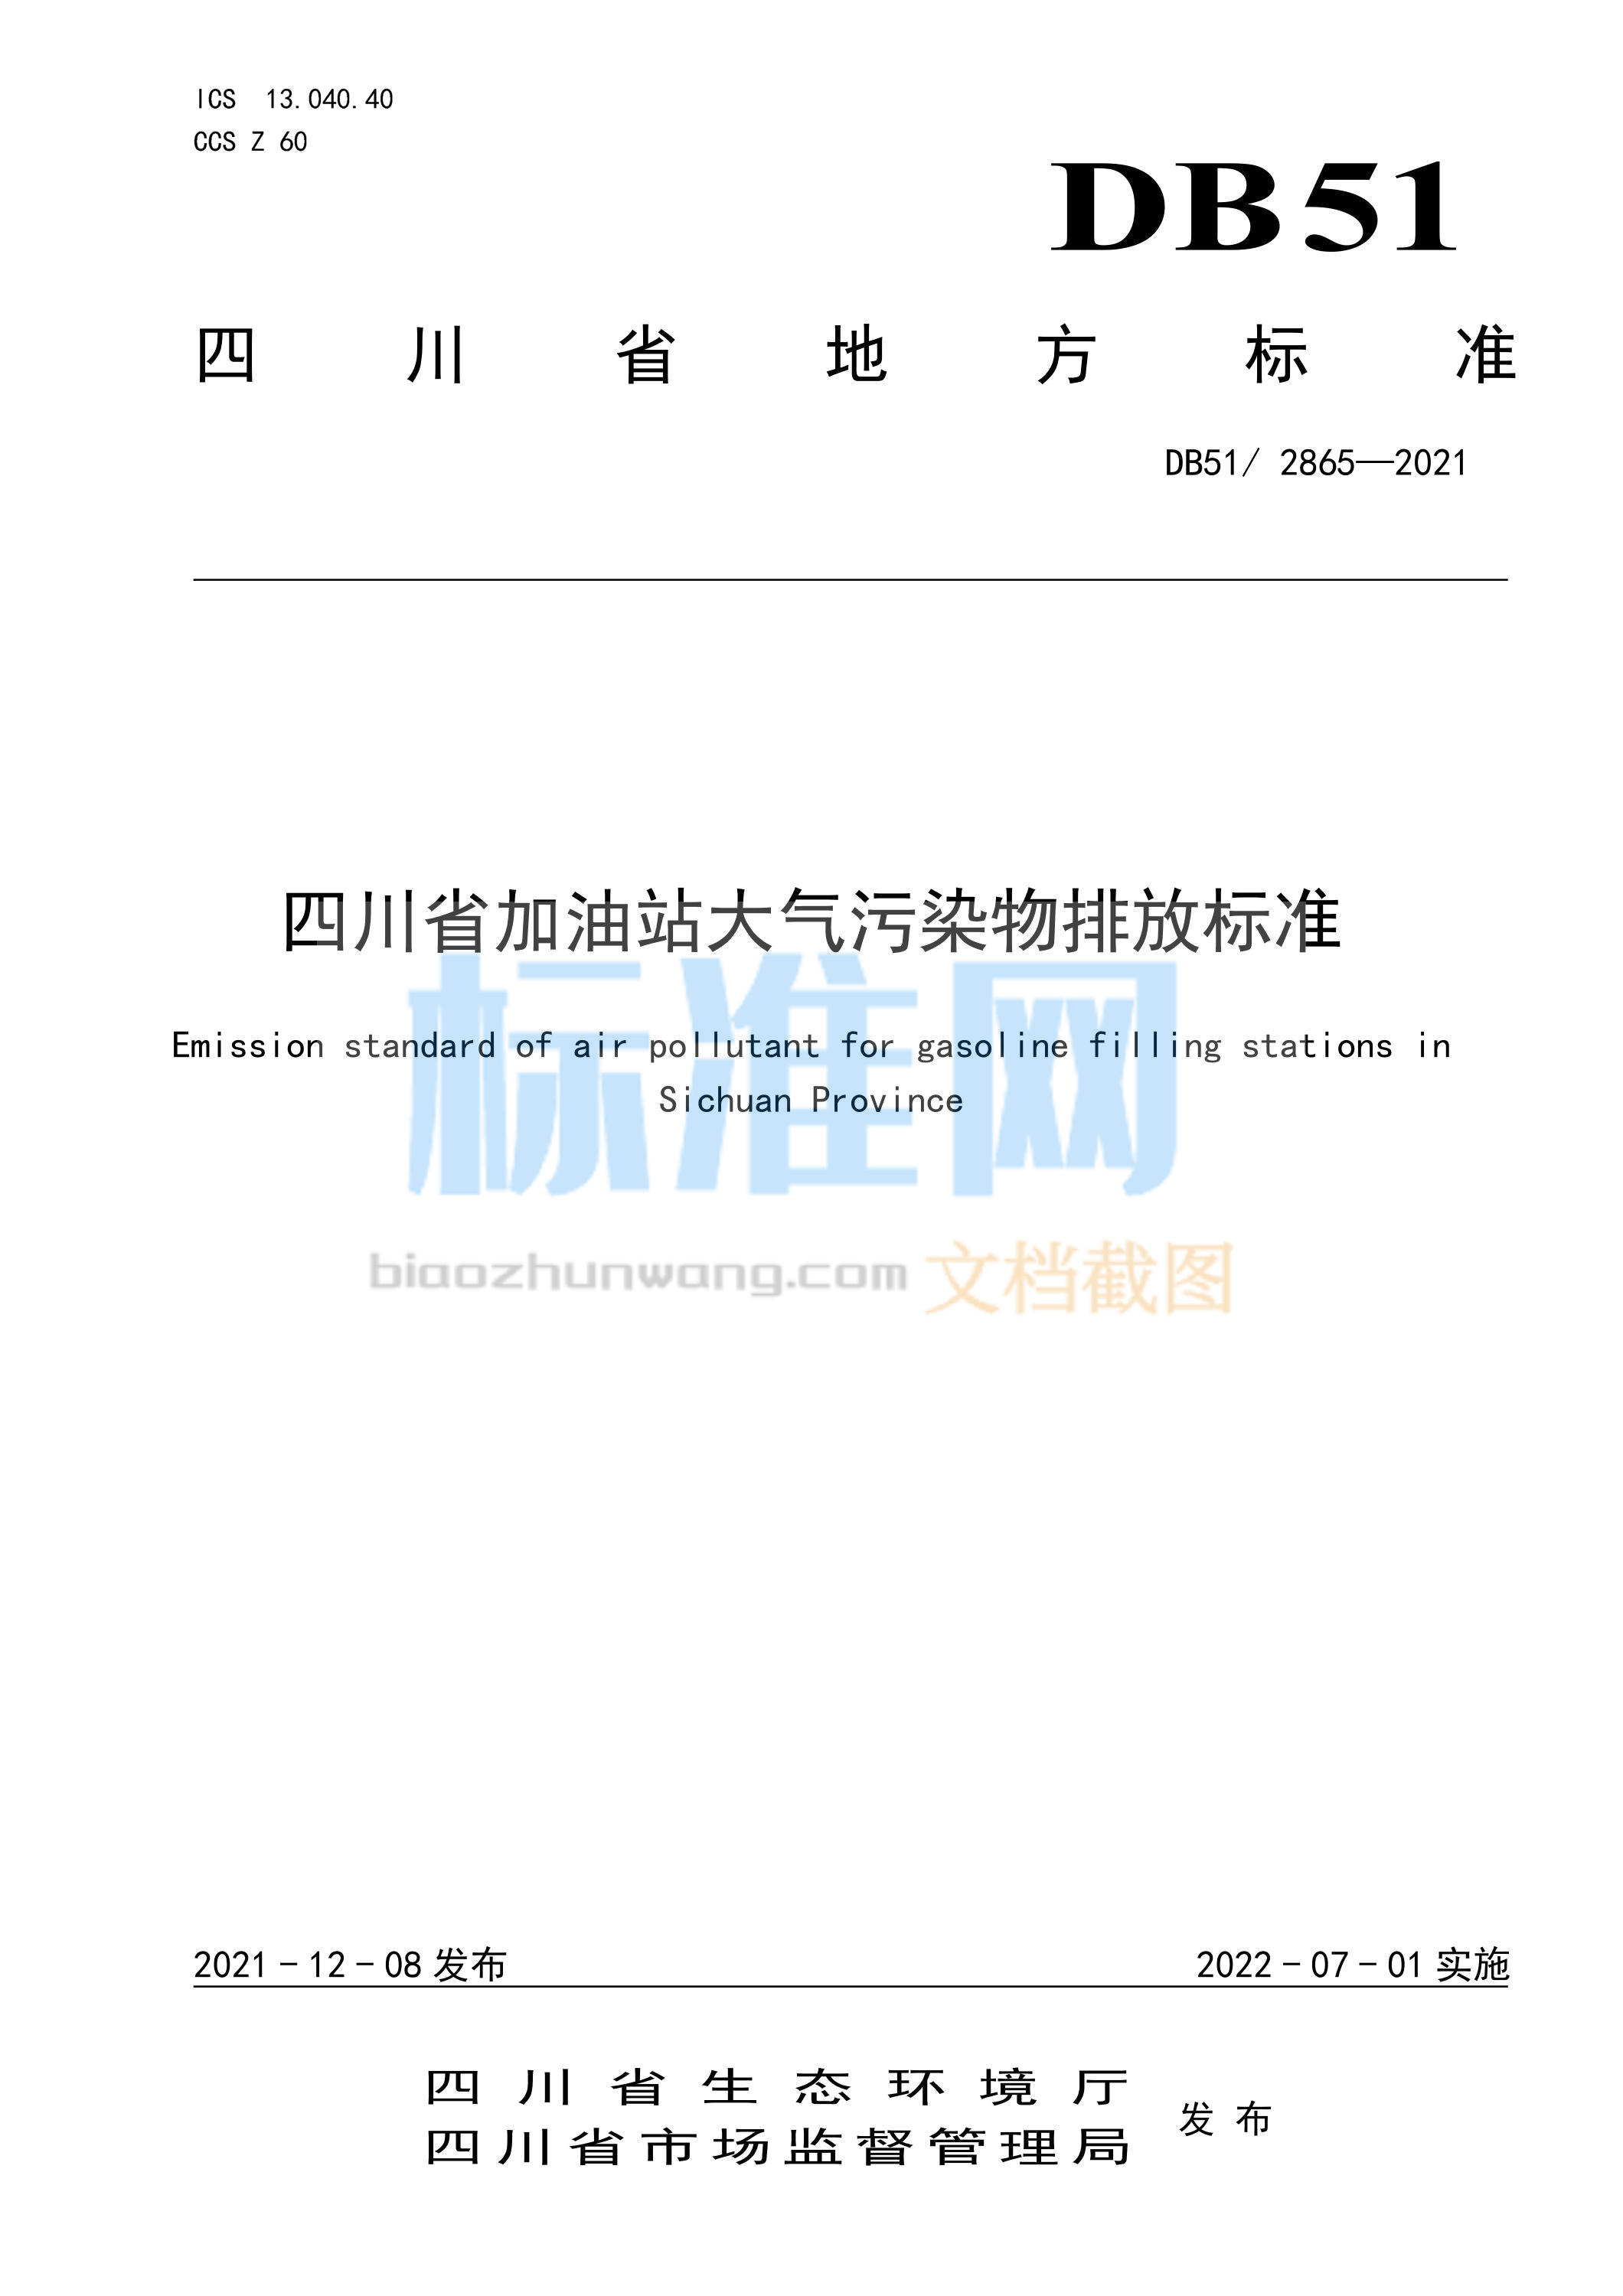 DB51∕2865-2021 四川省加油站大气污染物排放标准